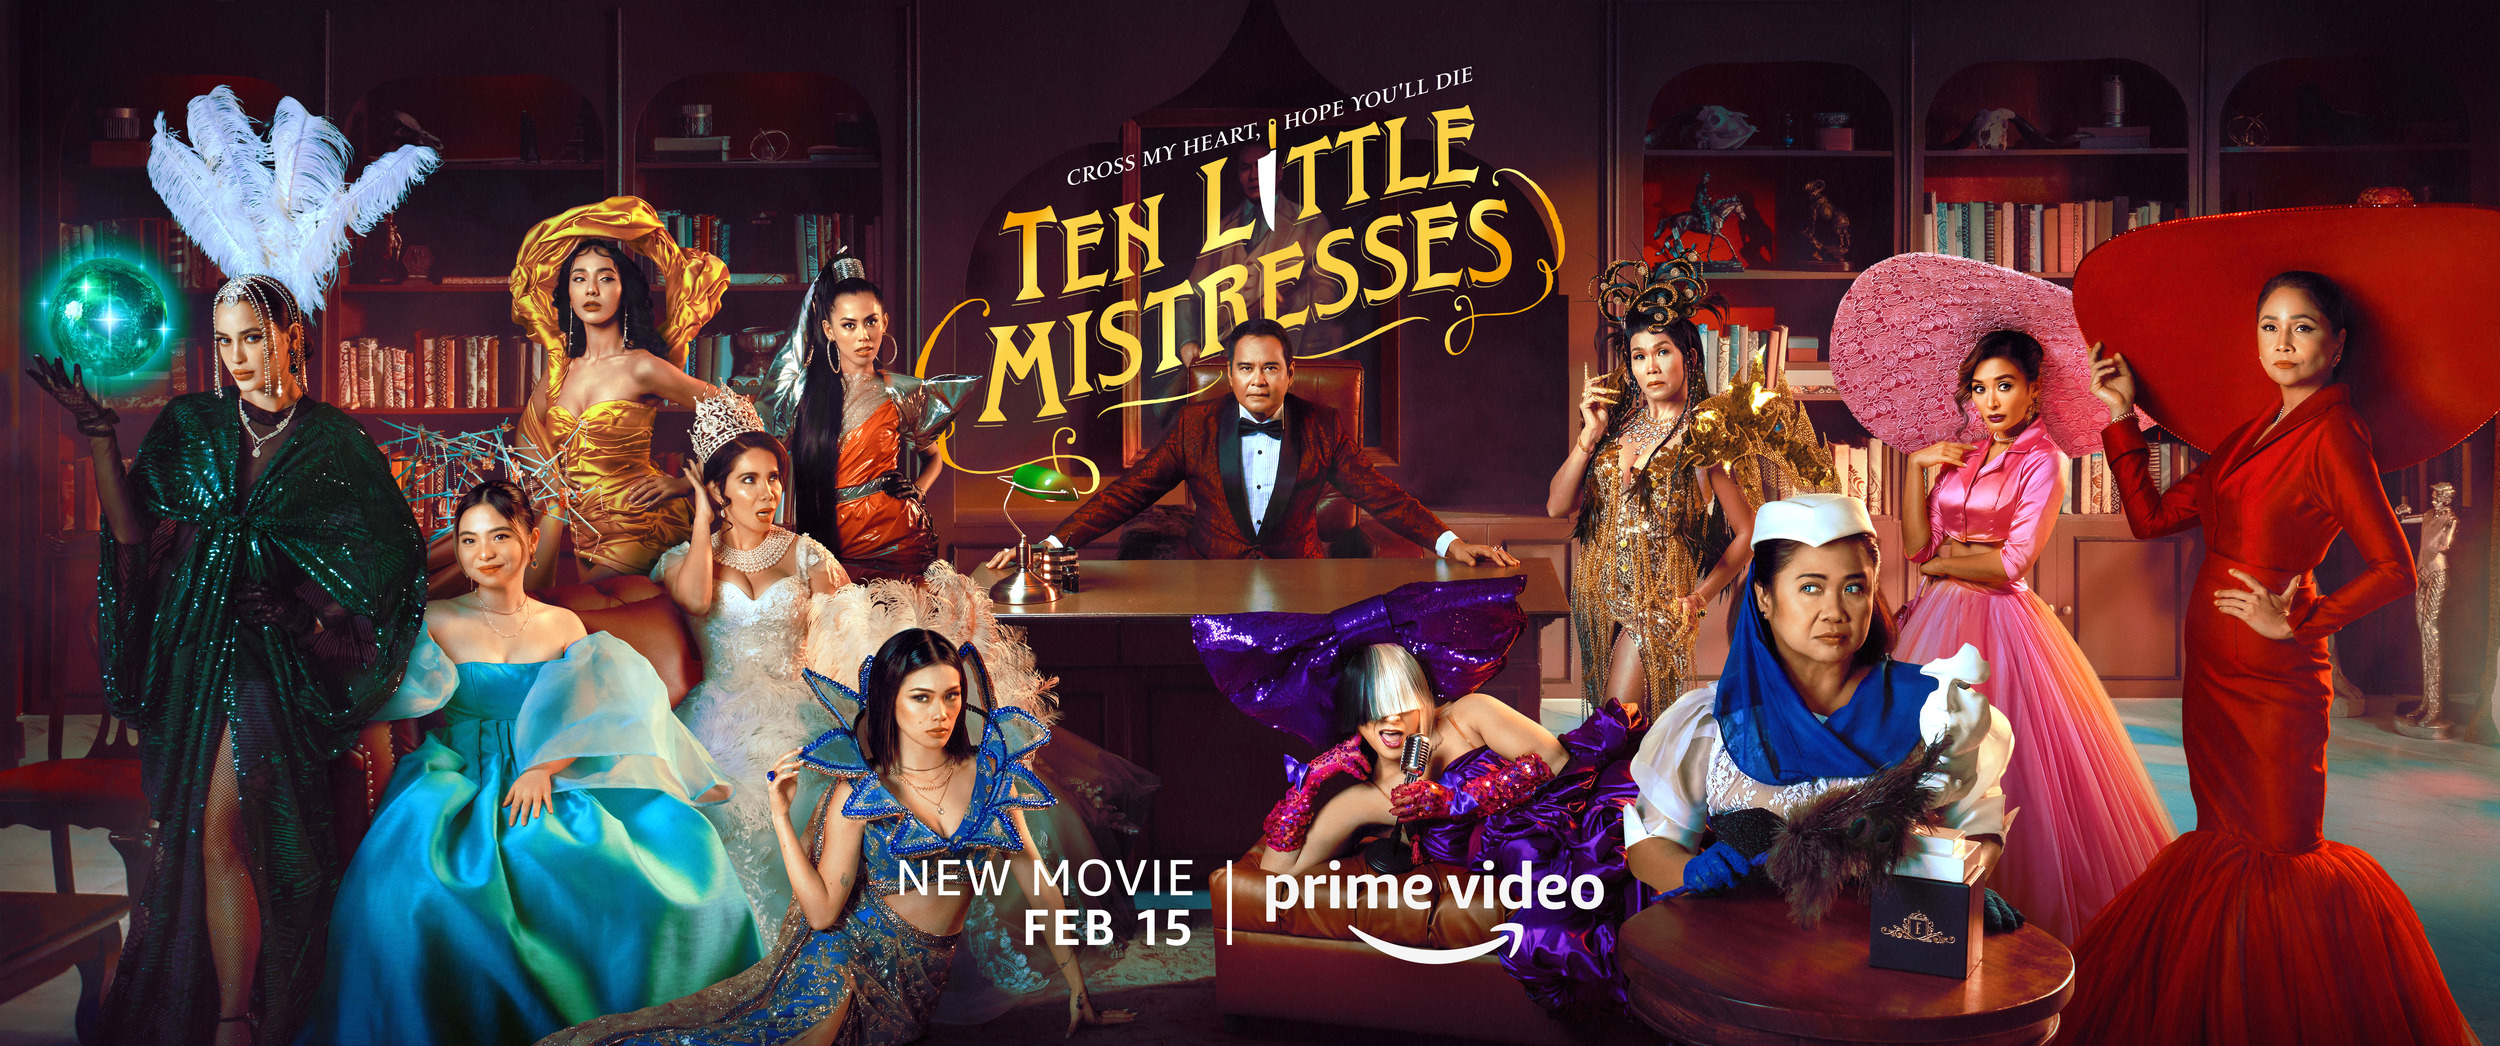 Mega Sized Movie Poster Image for Ten Little Mistresses (#14 of 14)